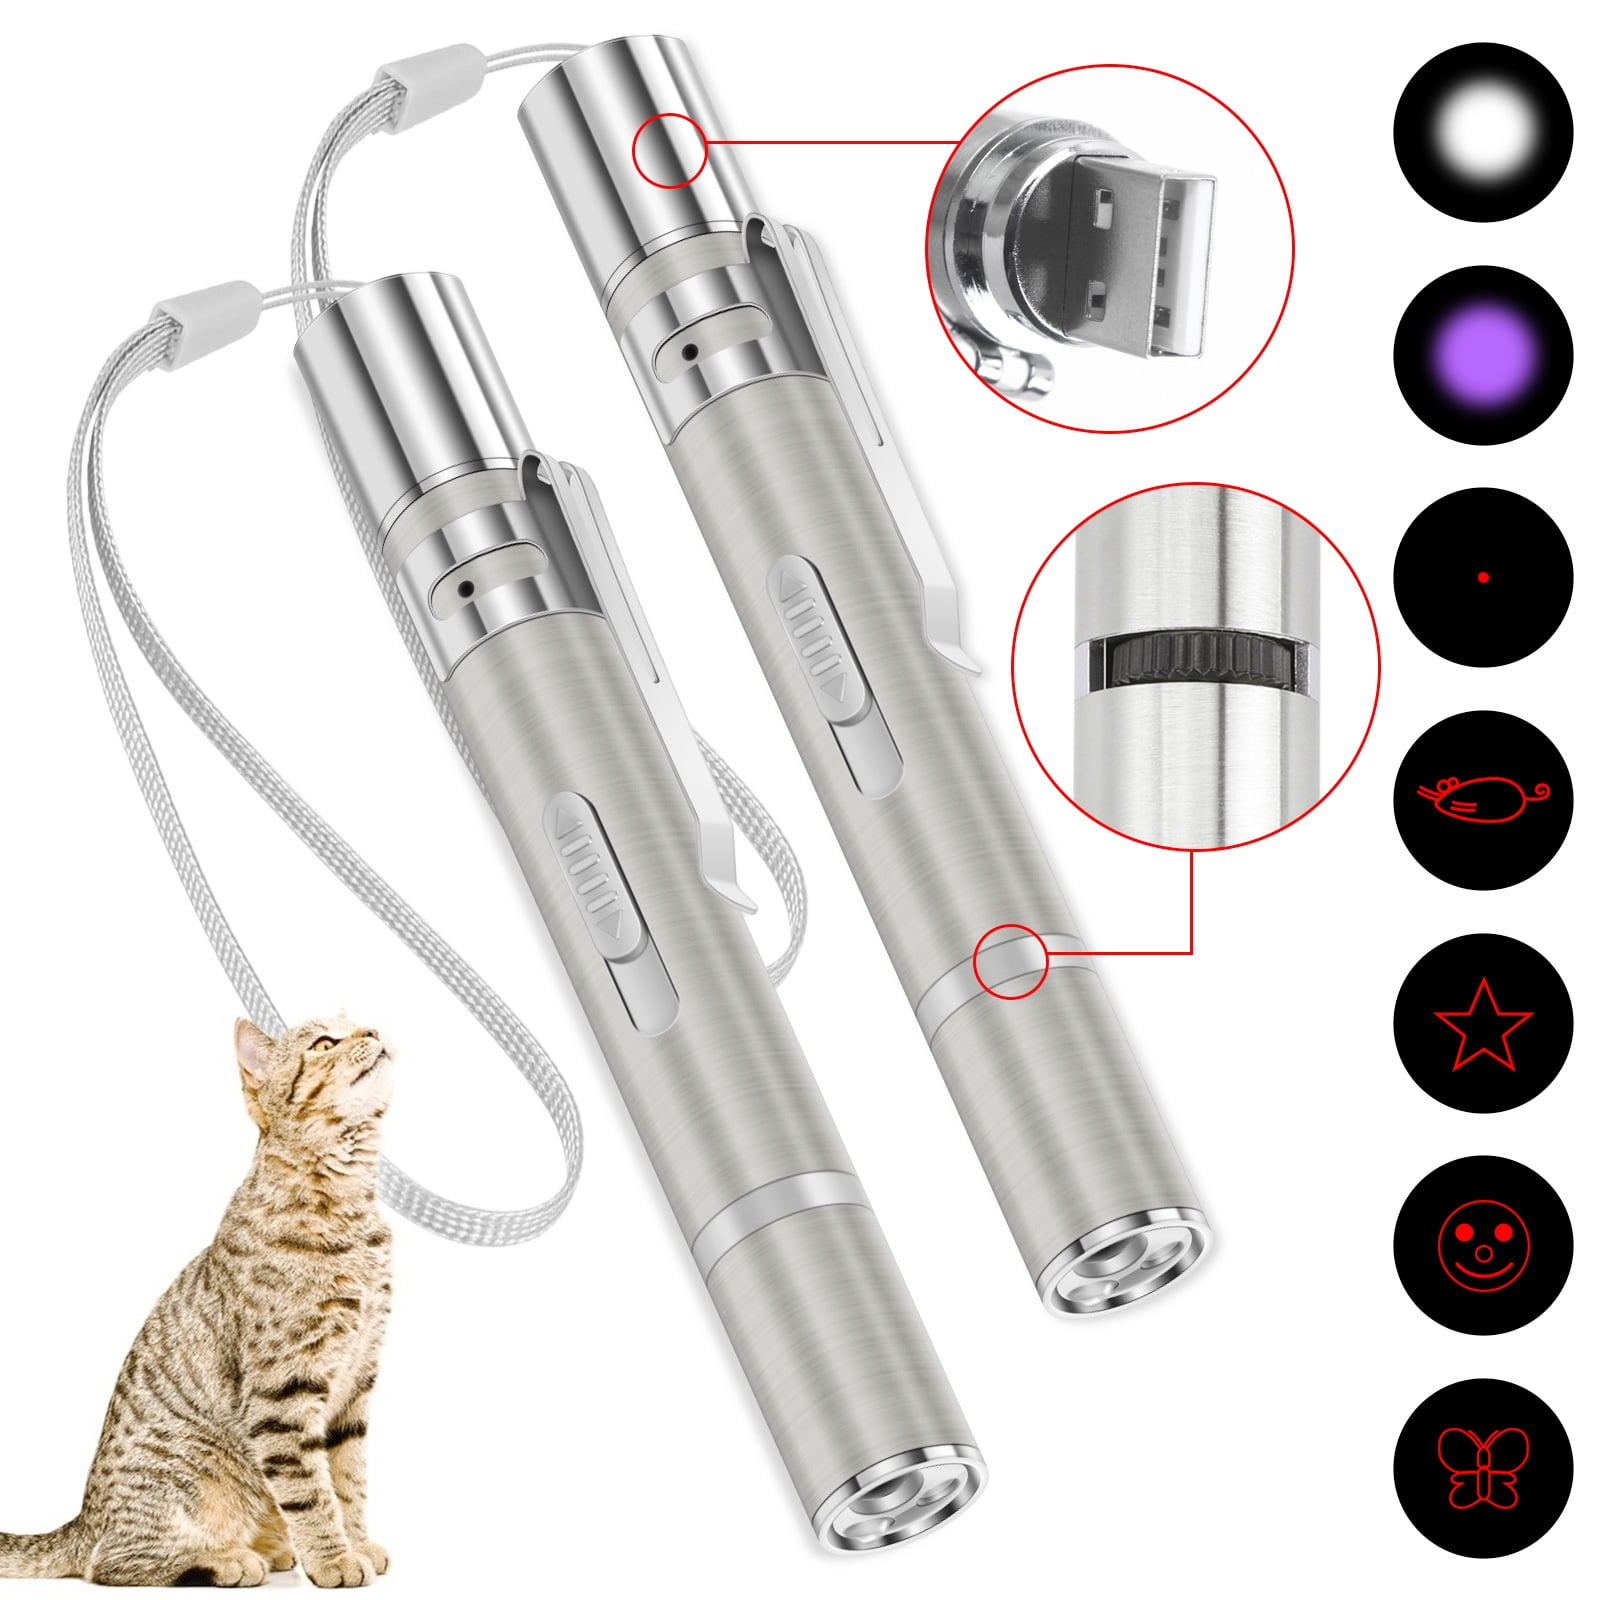 RED LASER Pointer Pen Light High Beam 1mW Premium Powerful Grade Animal Cat Dog 